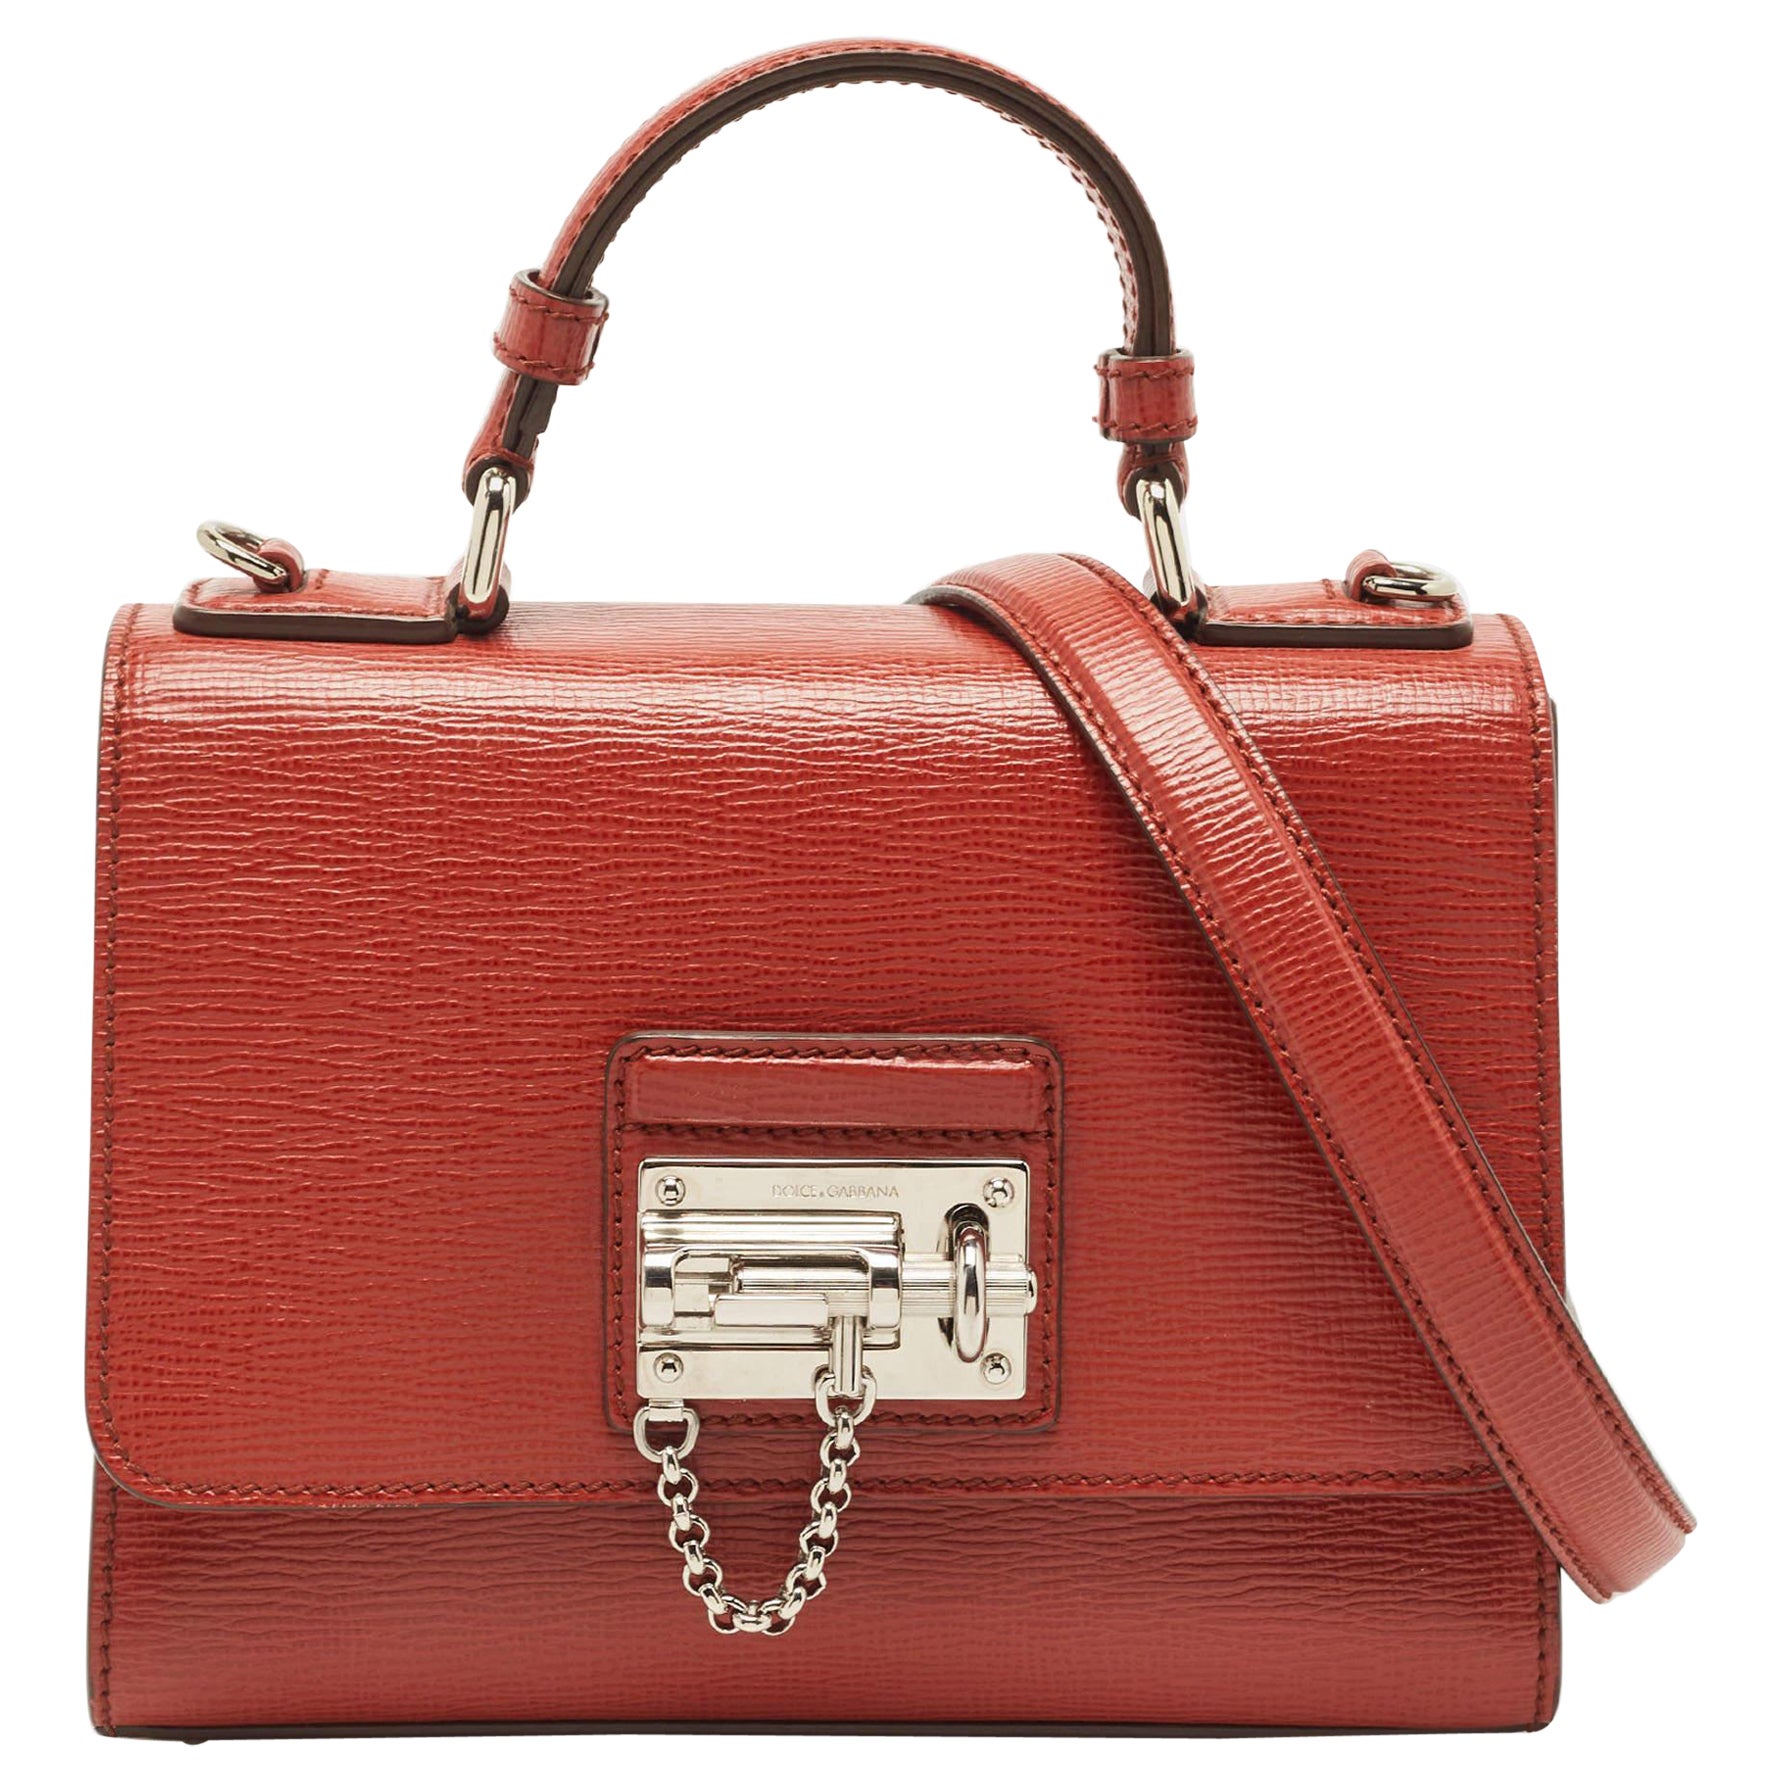 Fendi Touch Leather Shoulder Bag Brown - Dallas Handbags